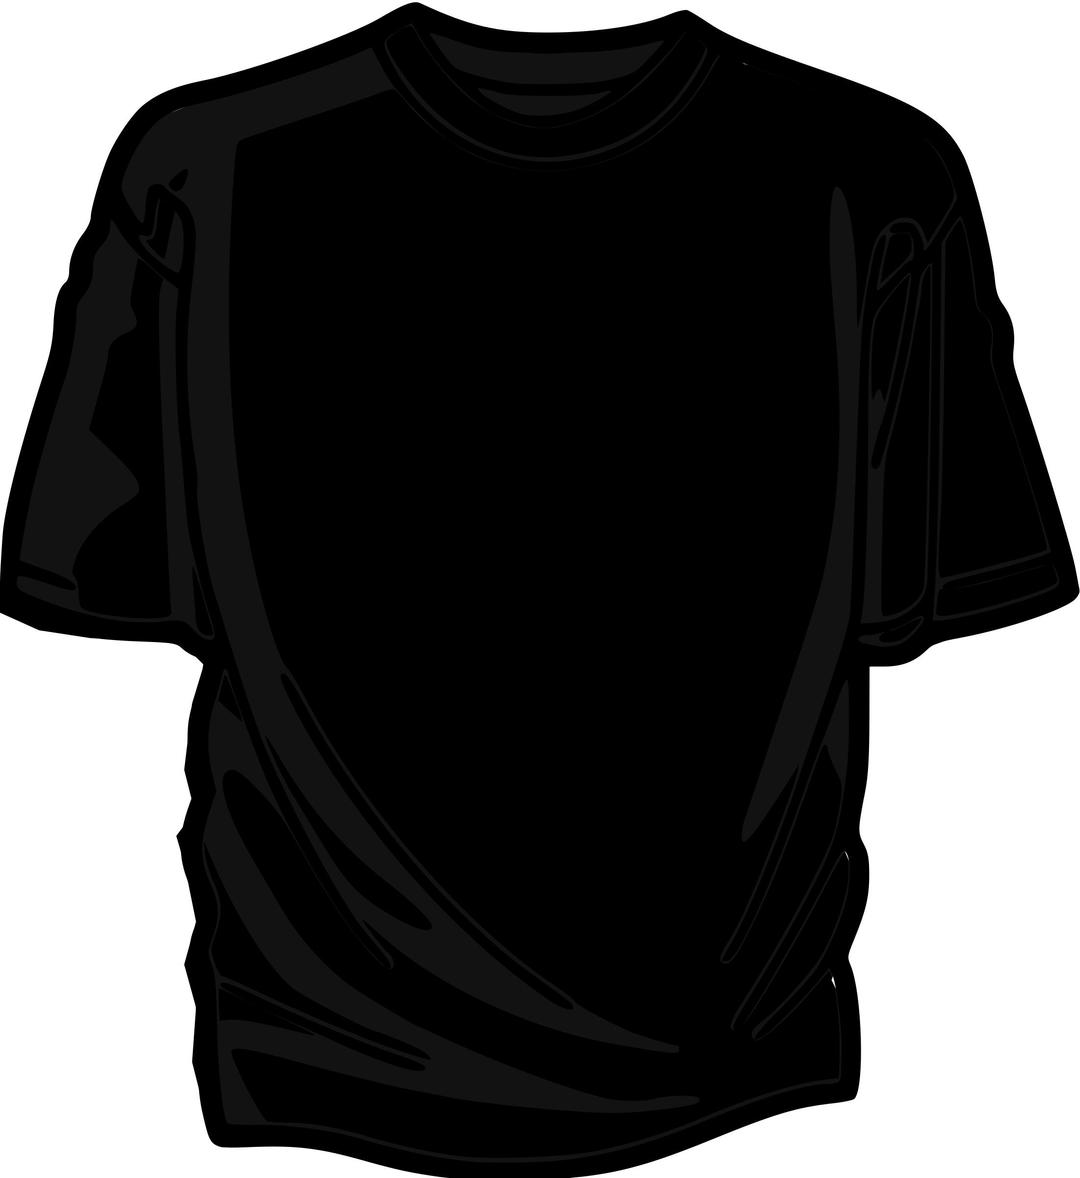 T-Shirt-black-02 png transparent